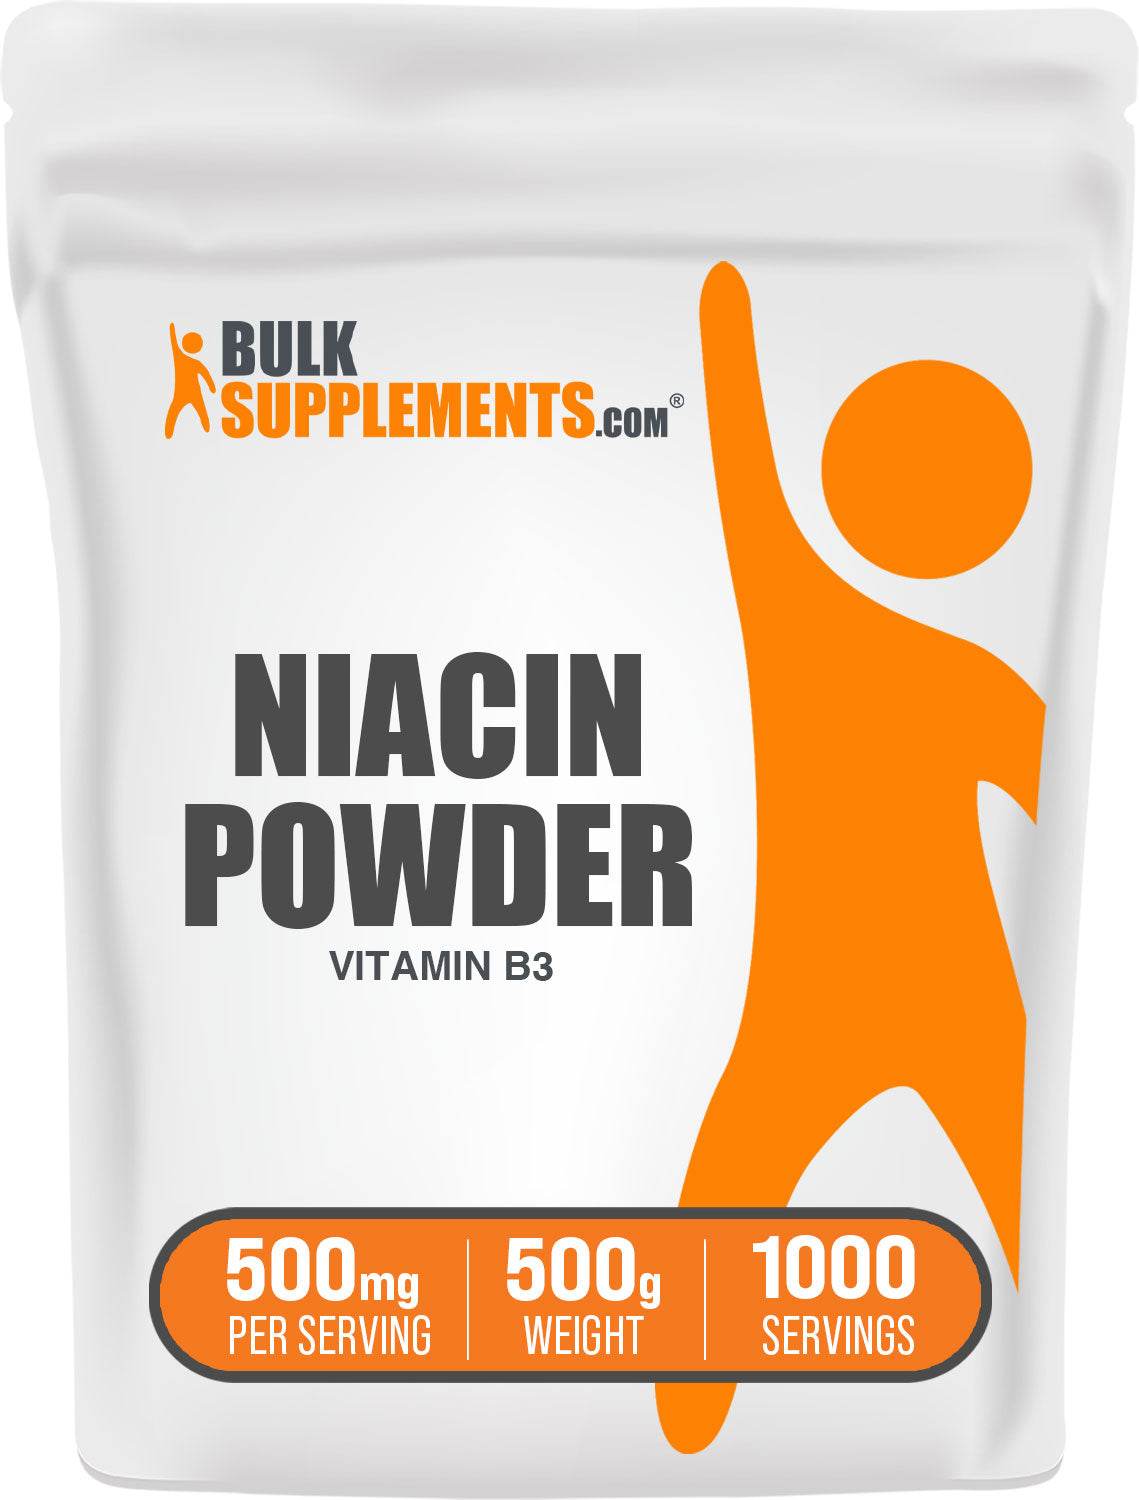 BulkSupplements Niacin Powder Vitamin B3 500g bag